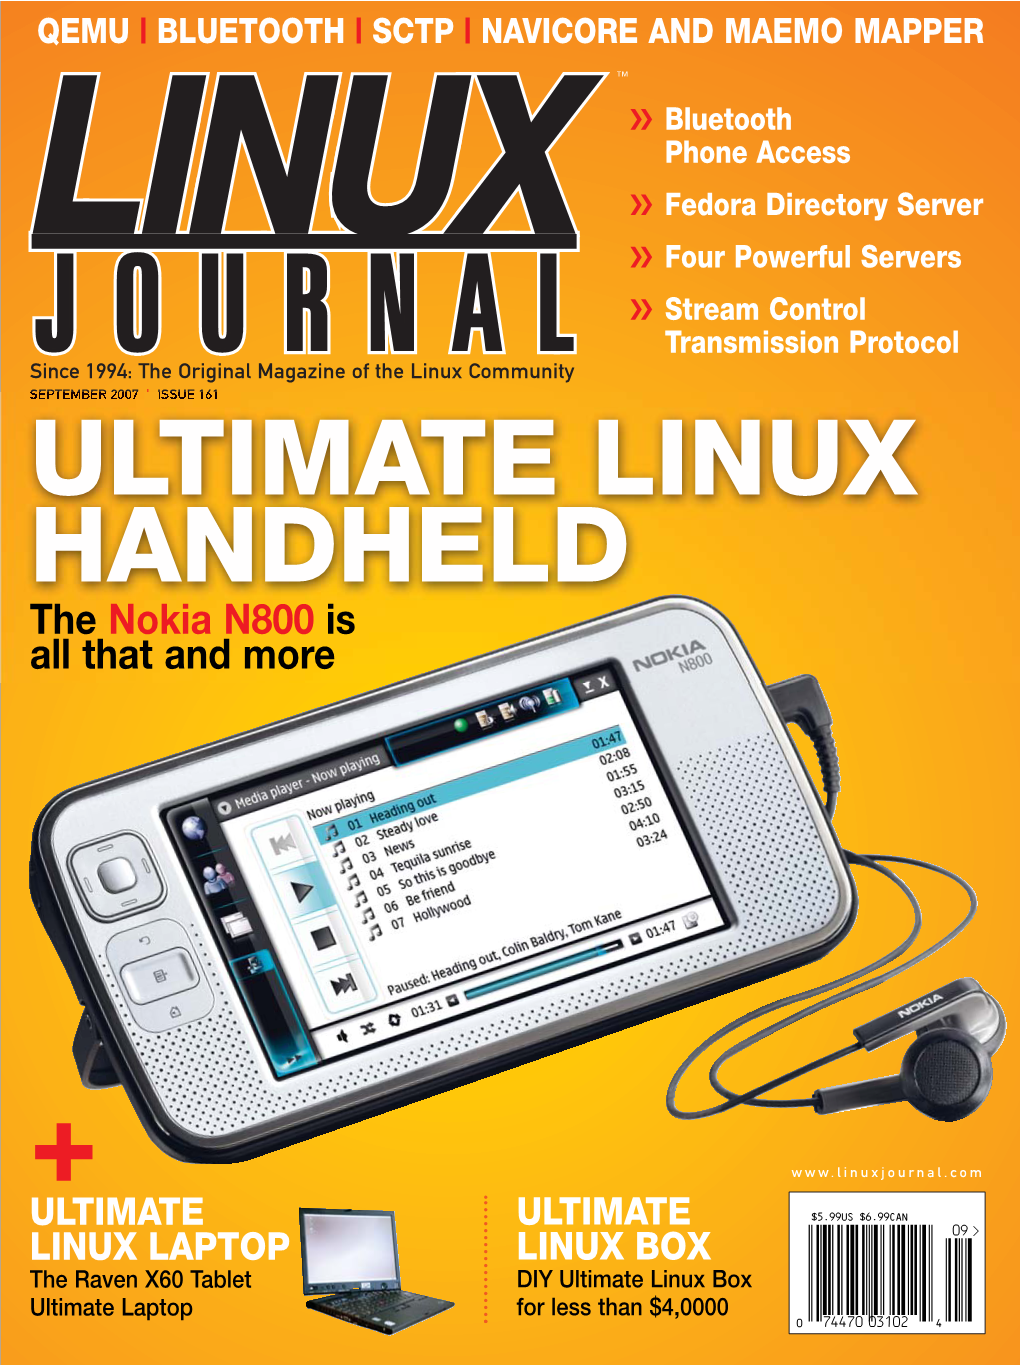 Ultimate Linux Handheld, P